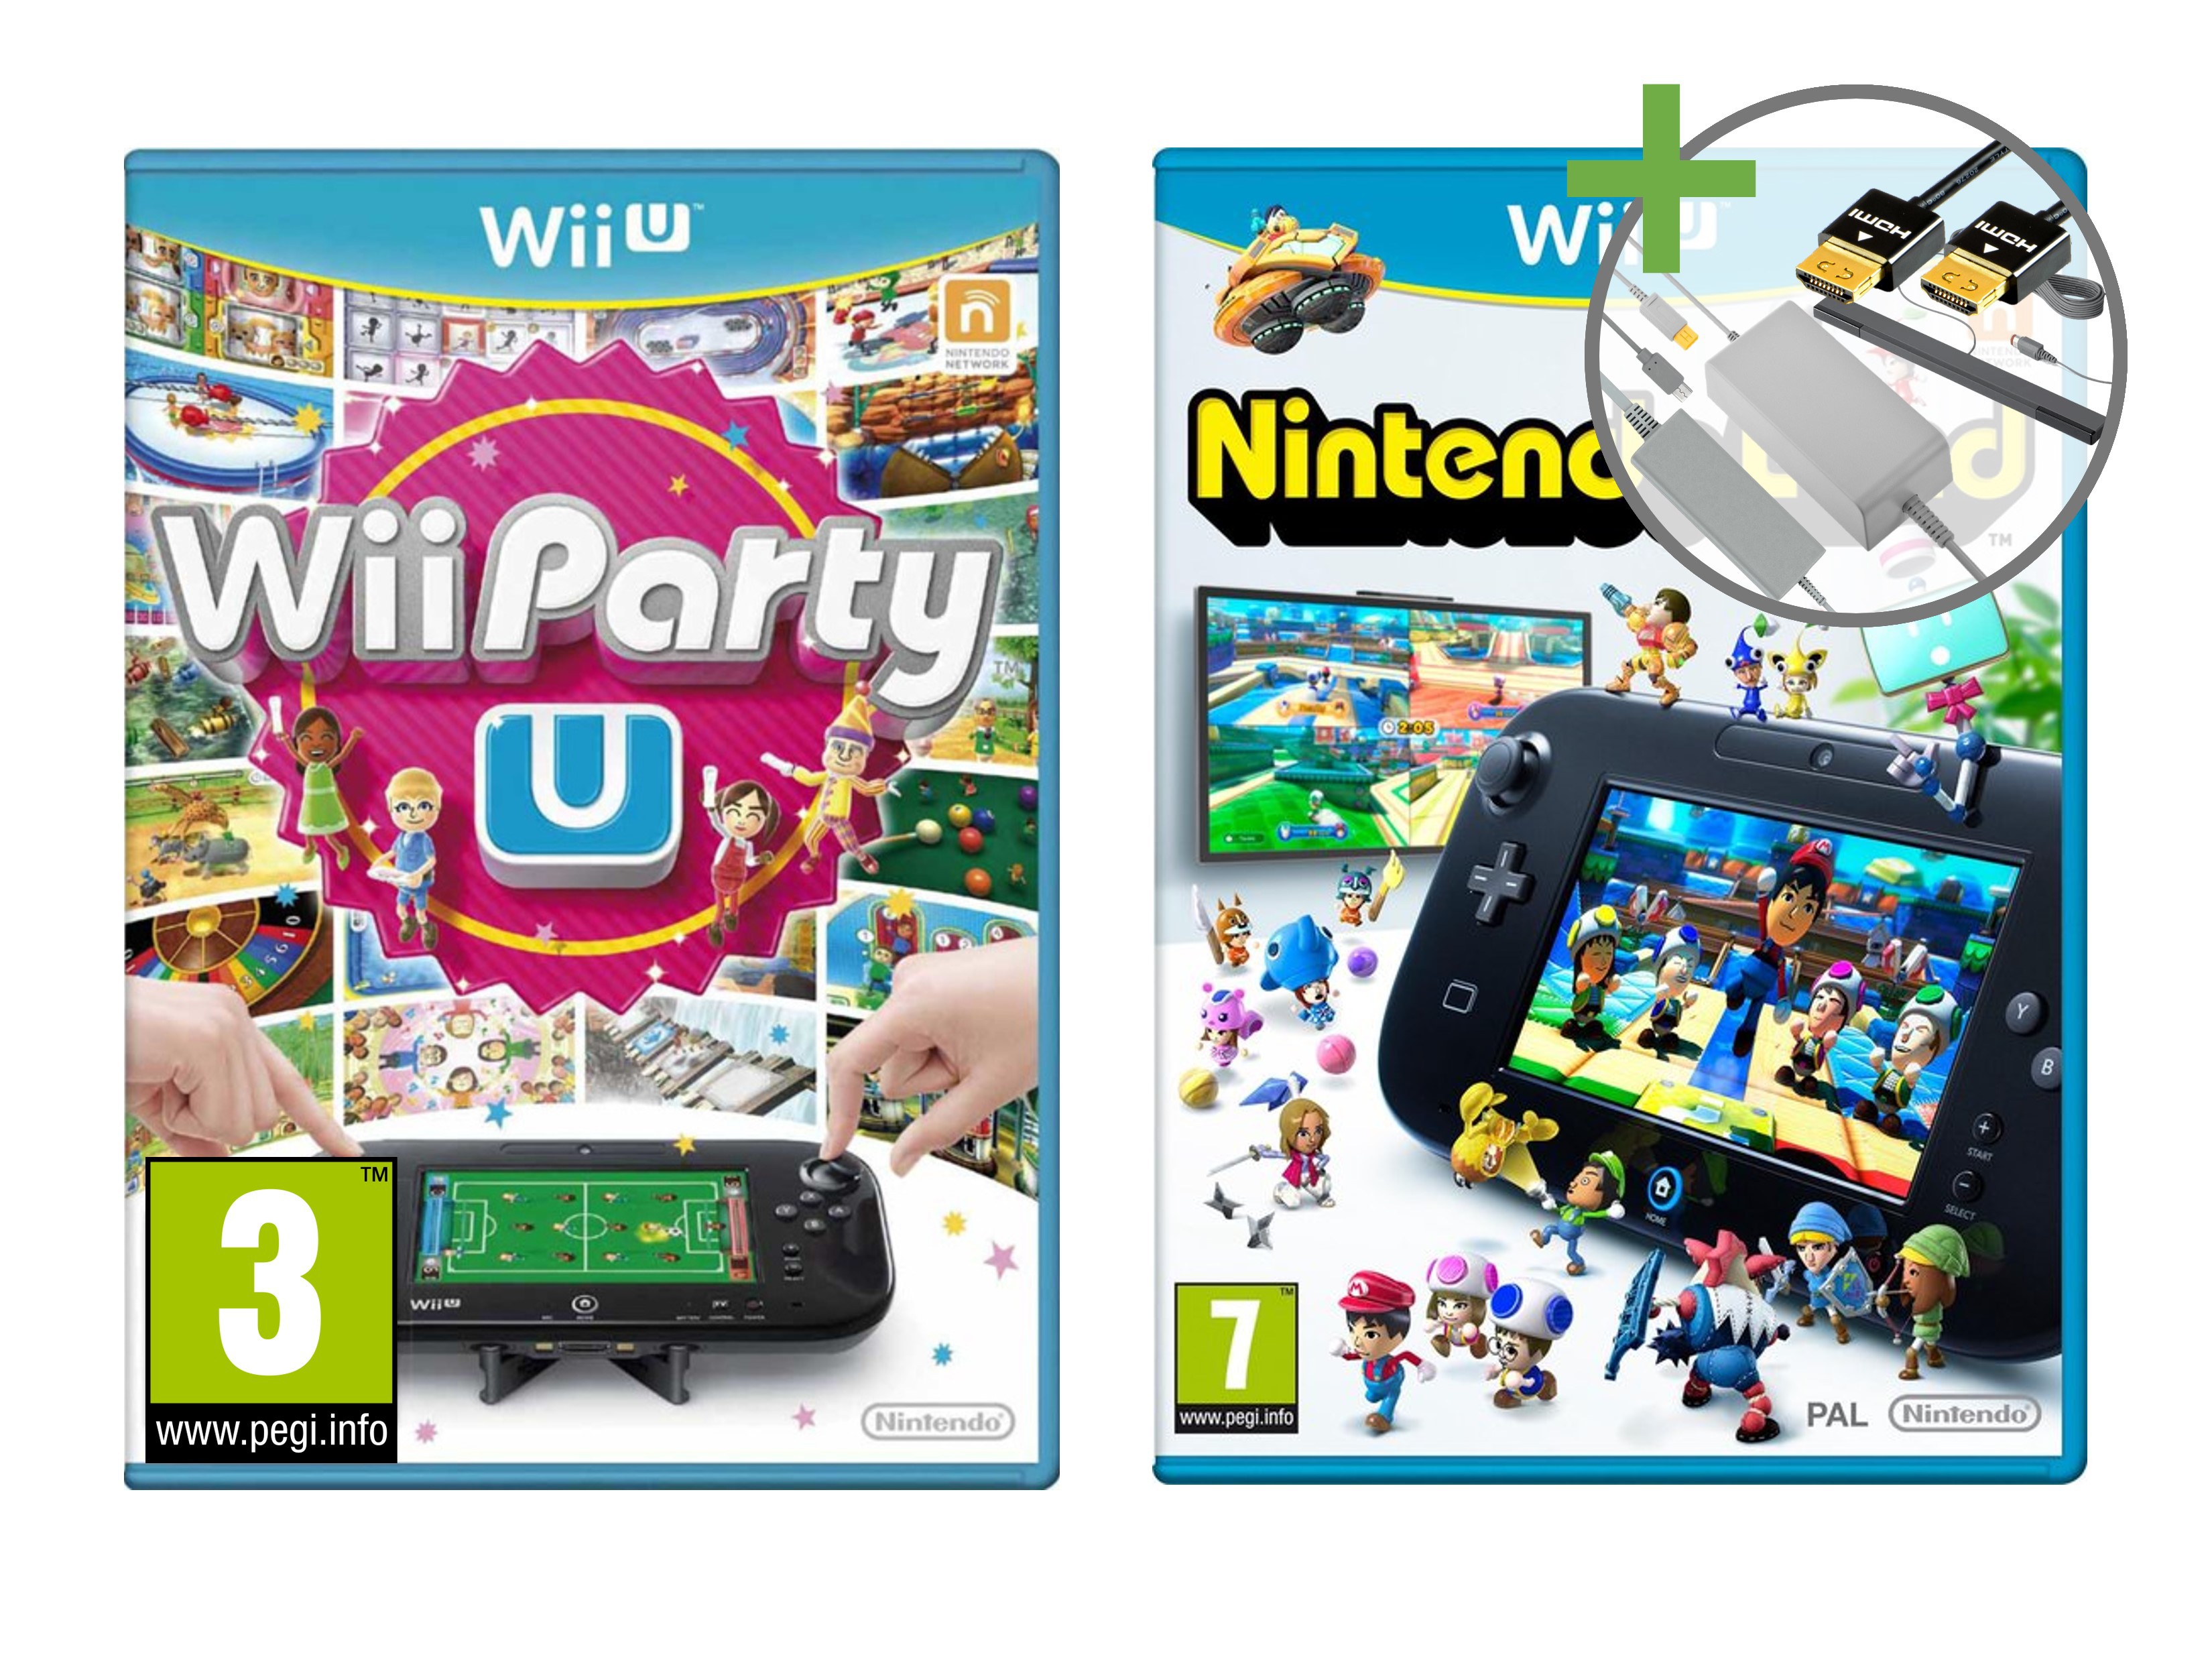 Nintendo Wii U Starter Pack - Wii Party U Edition [Complete] - Wii U Hardware - 6